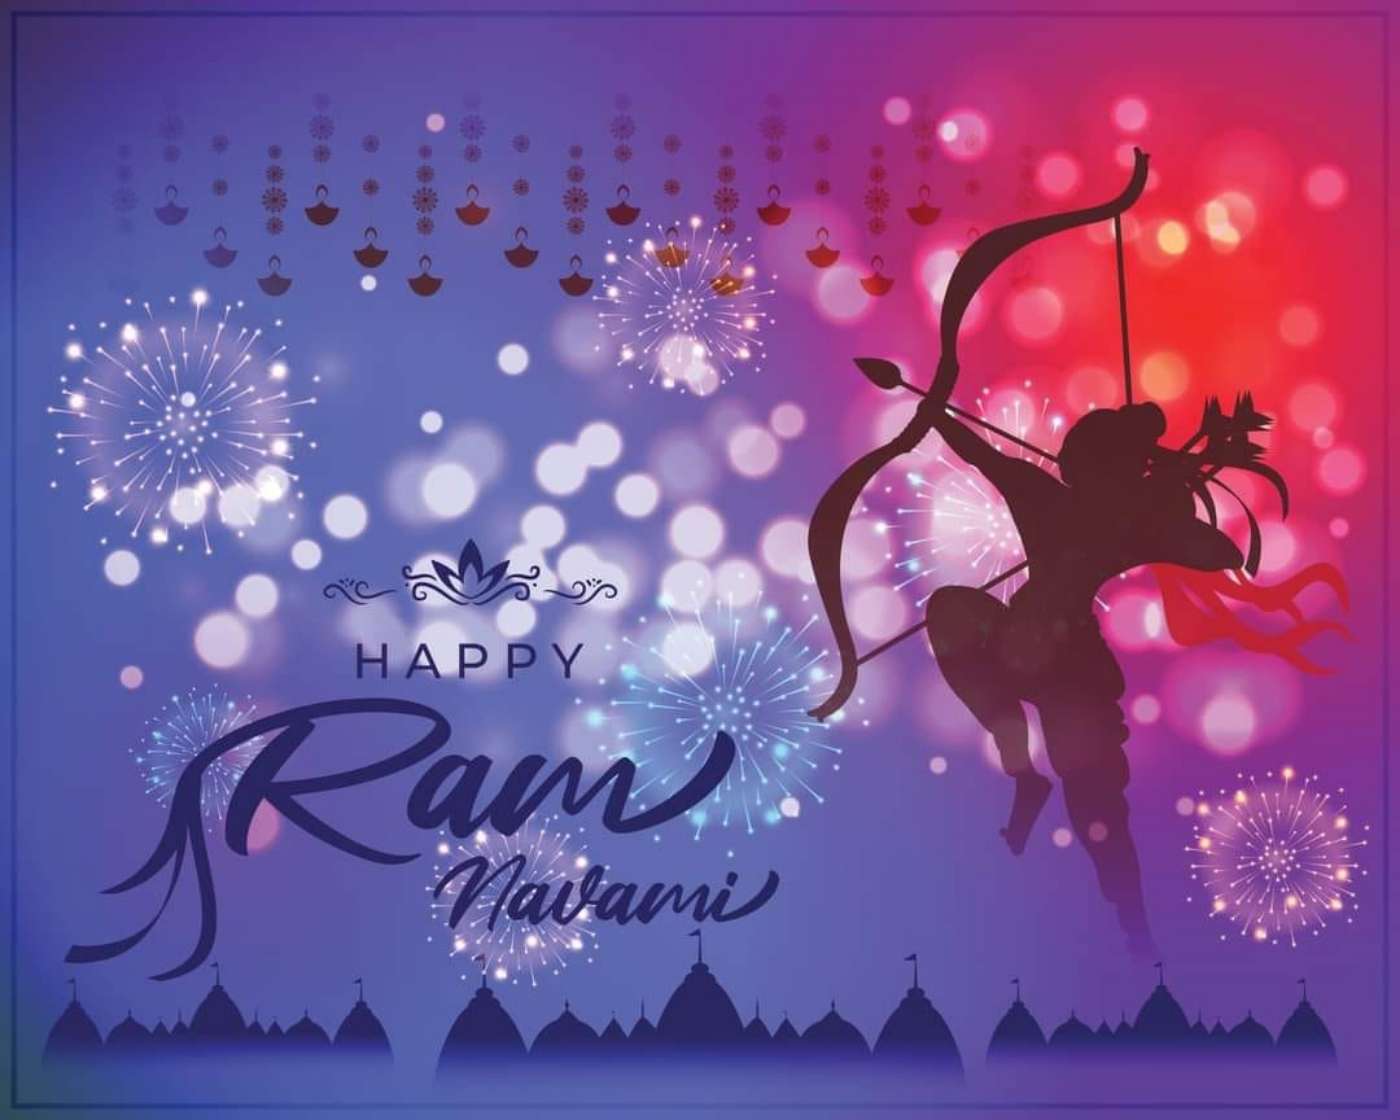 Happy Sri Rama Navami Images